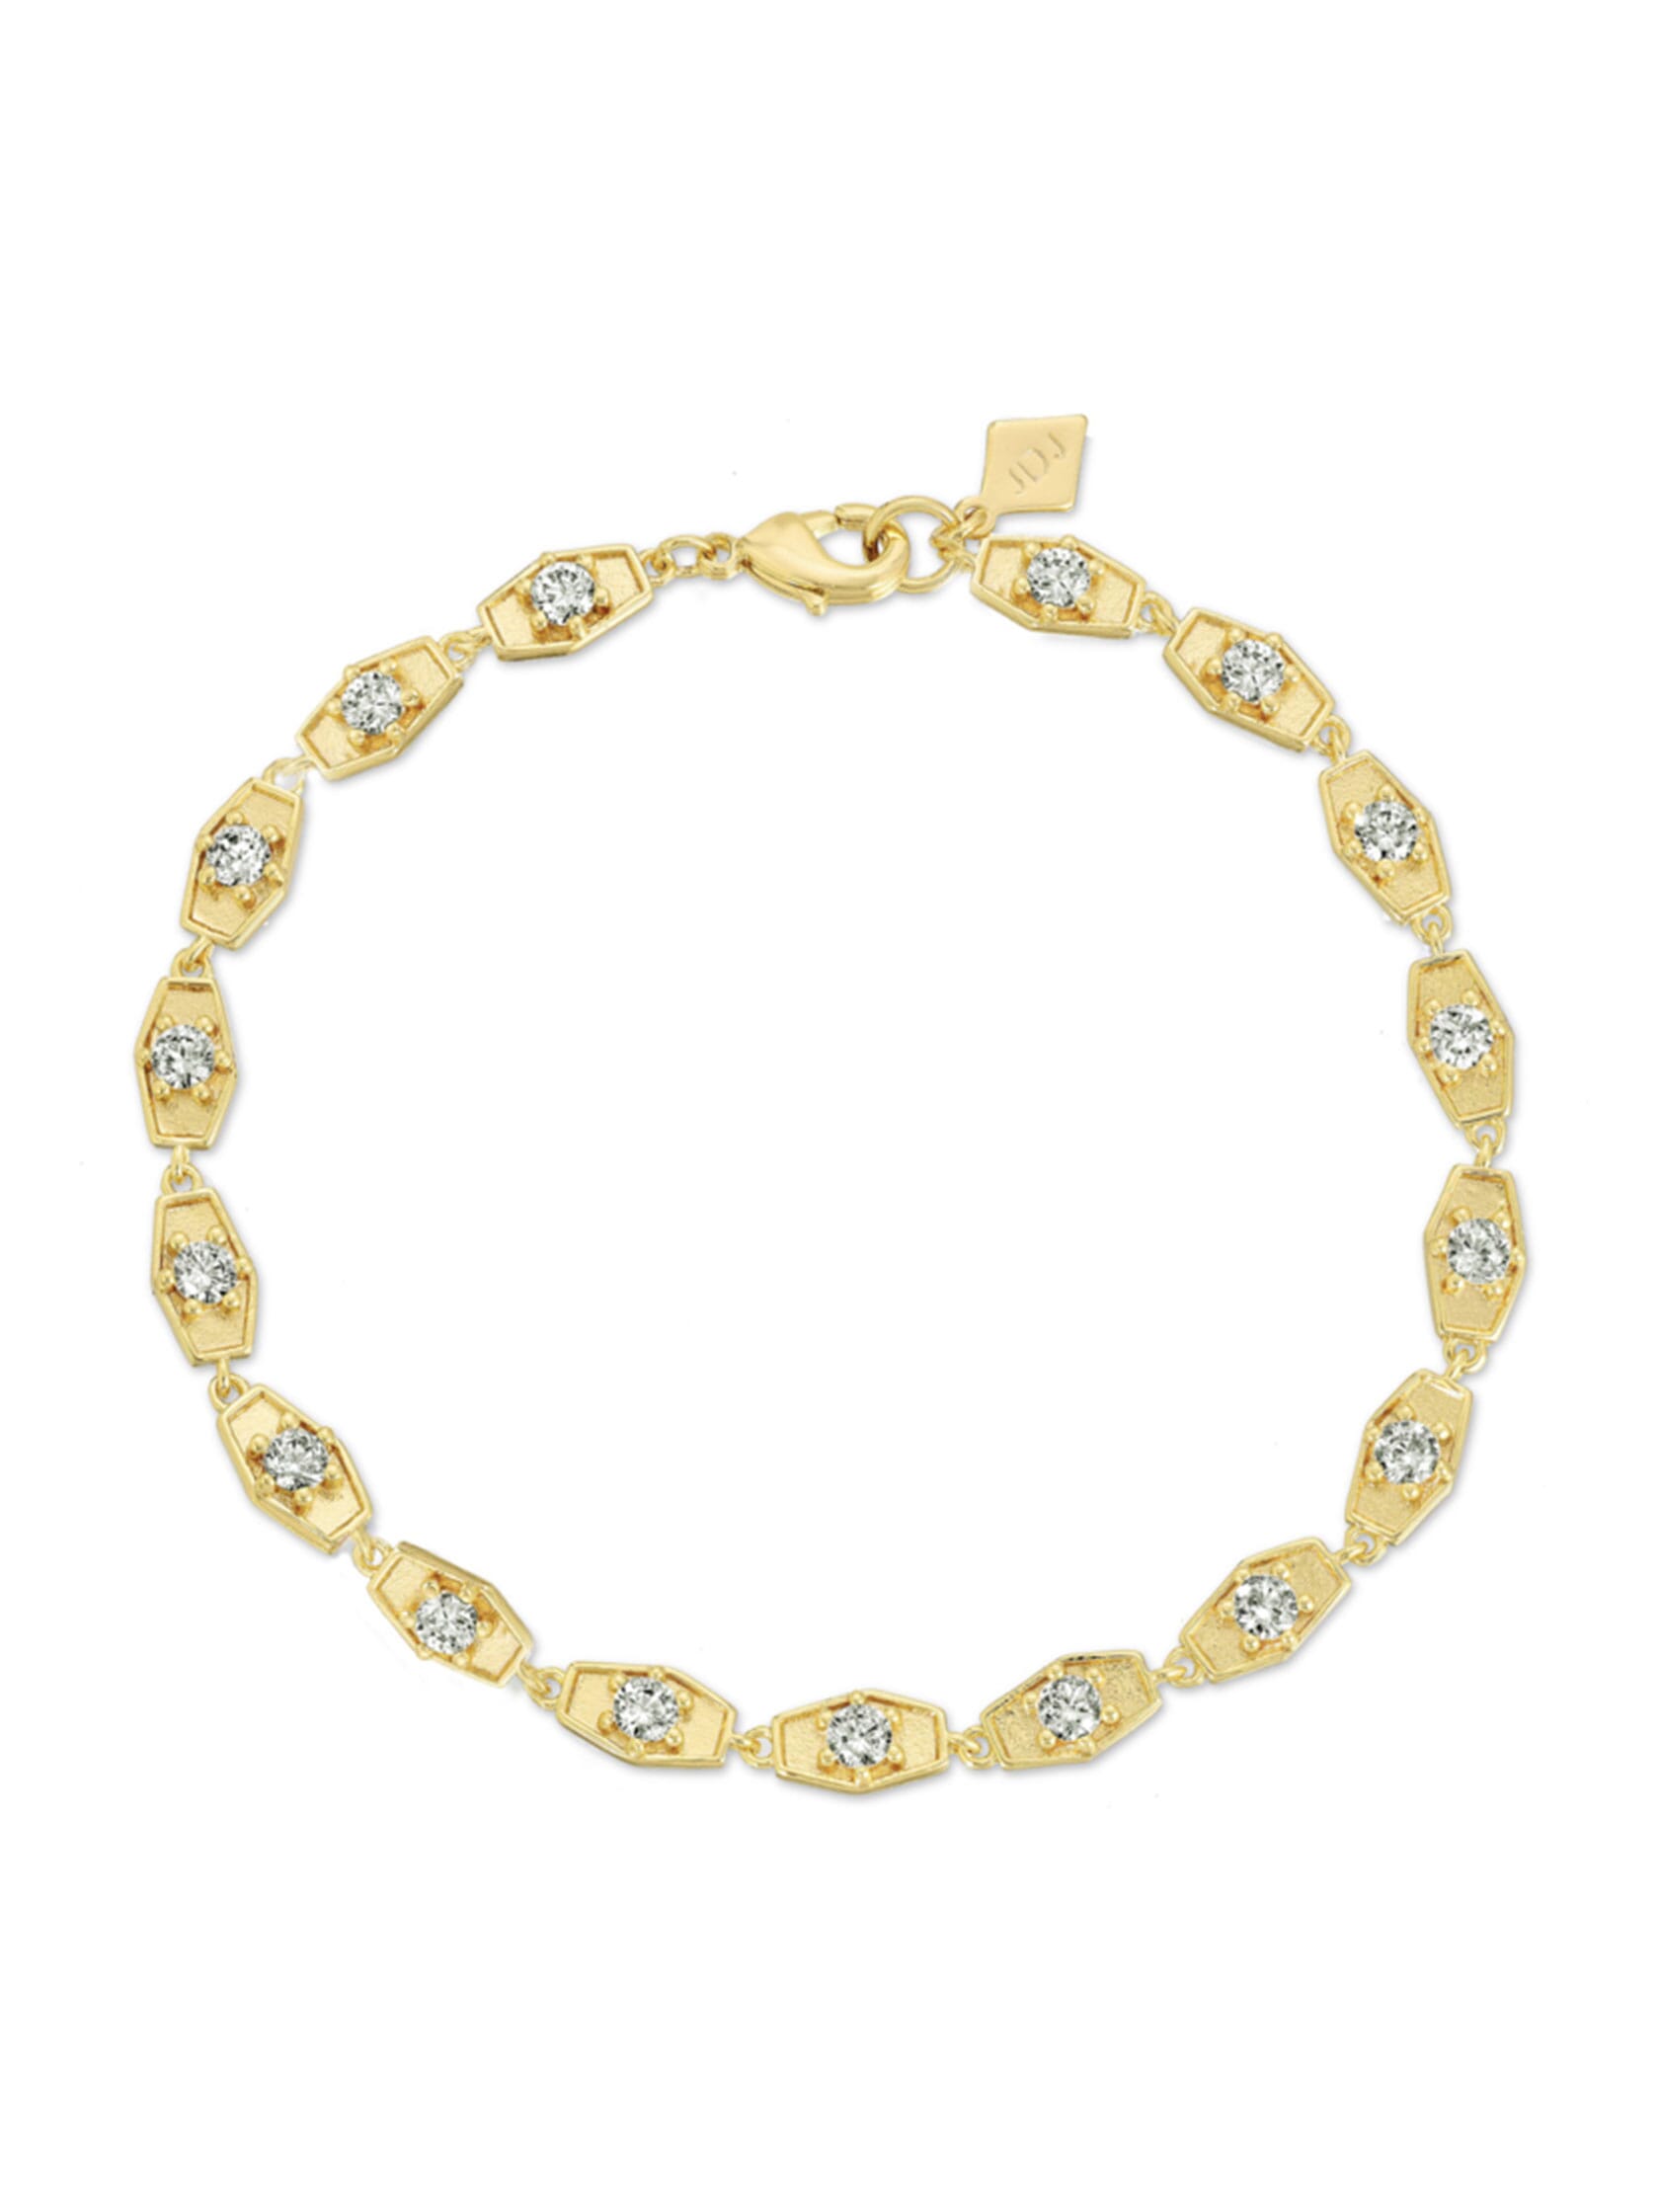 Joy Dravecky | New Tennis Bracelet in Gold| FashionPass